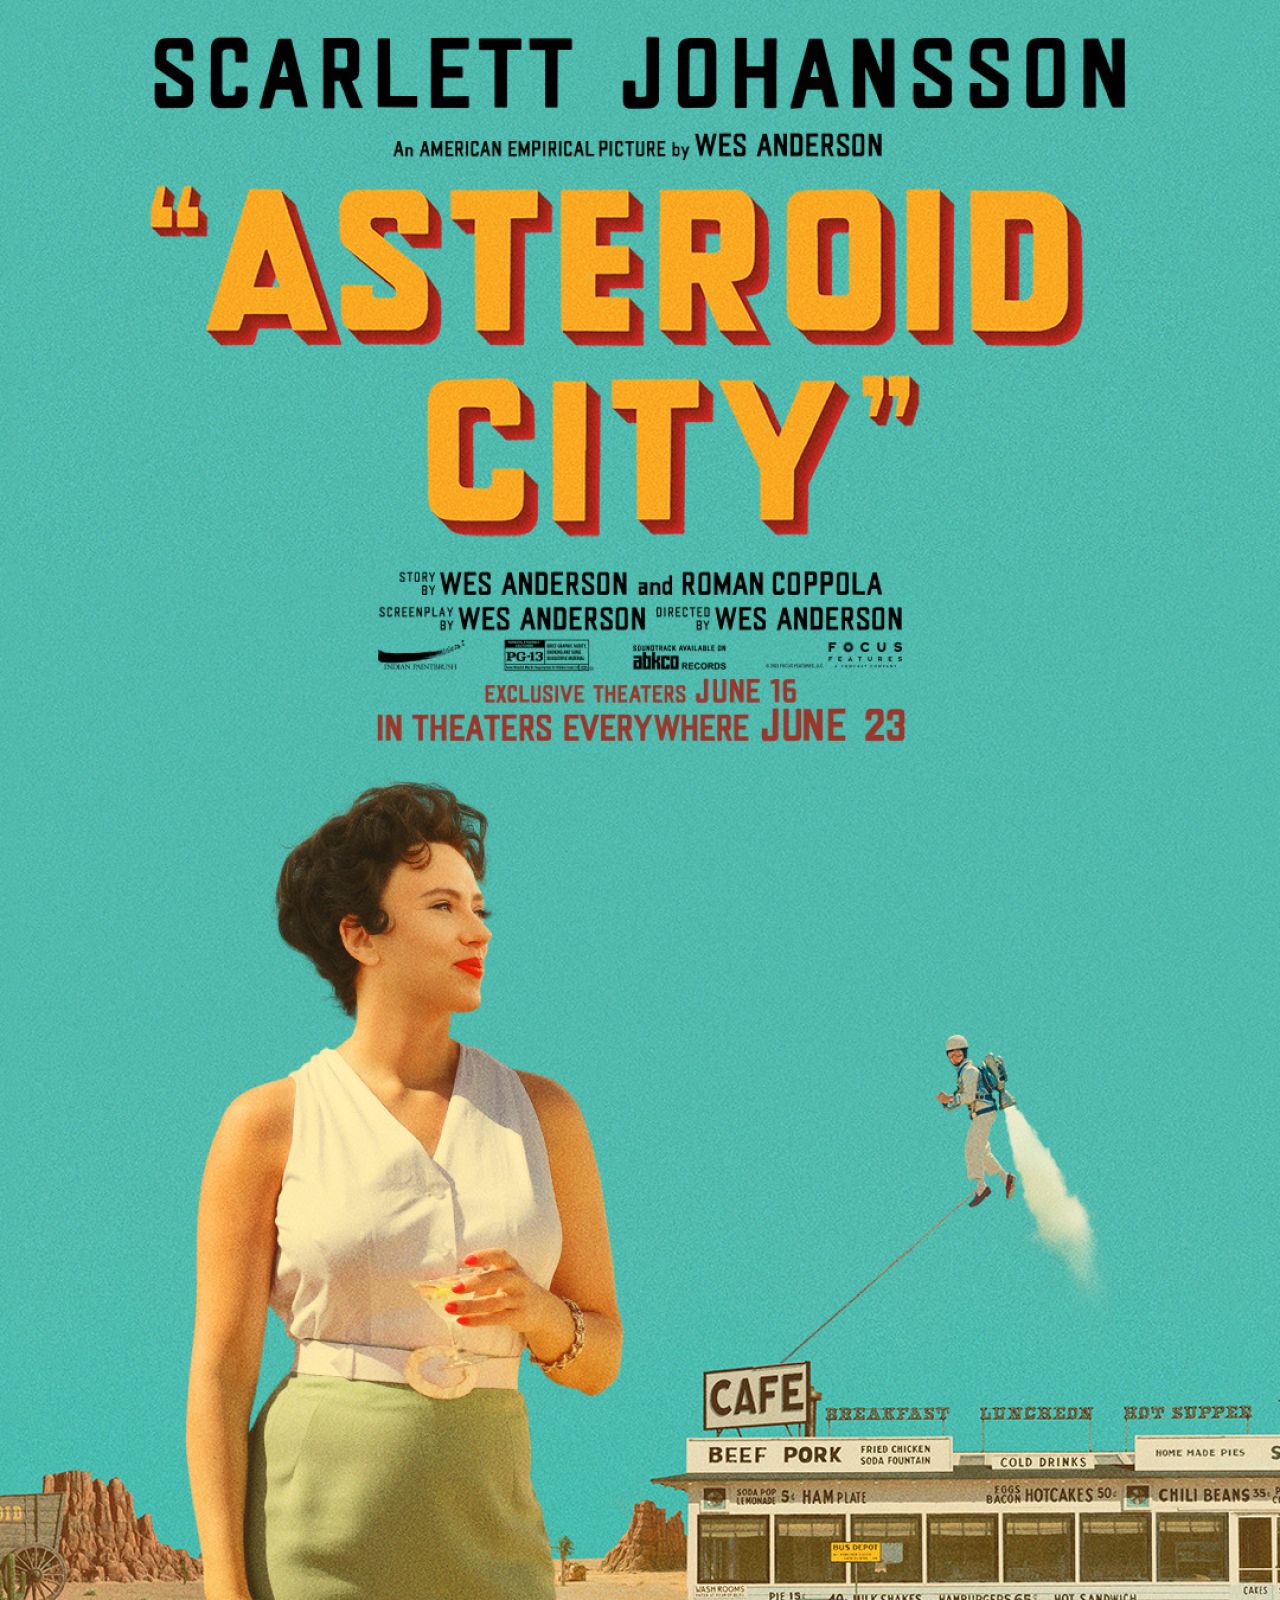 Scarlett Johansson "Asteroid City" Poster and Trailer • CelebMafia